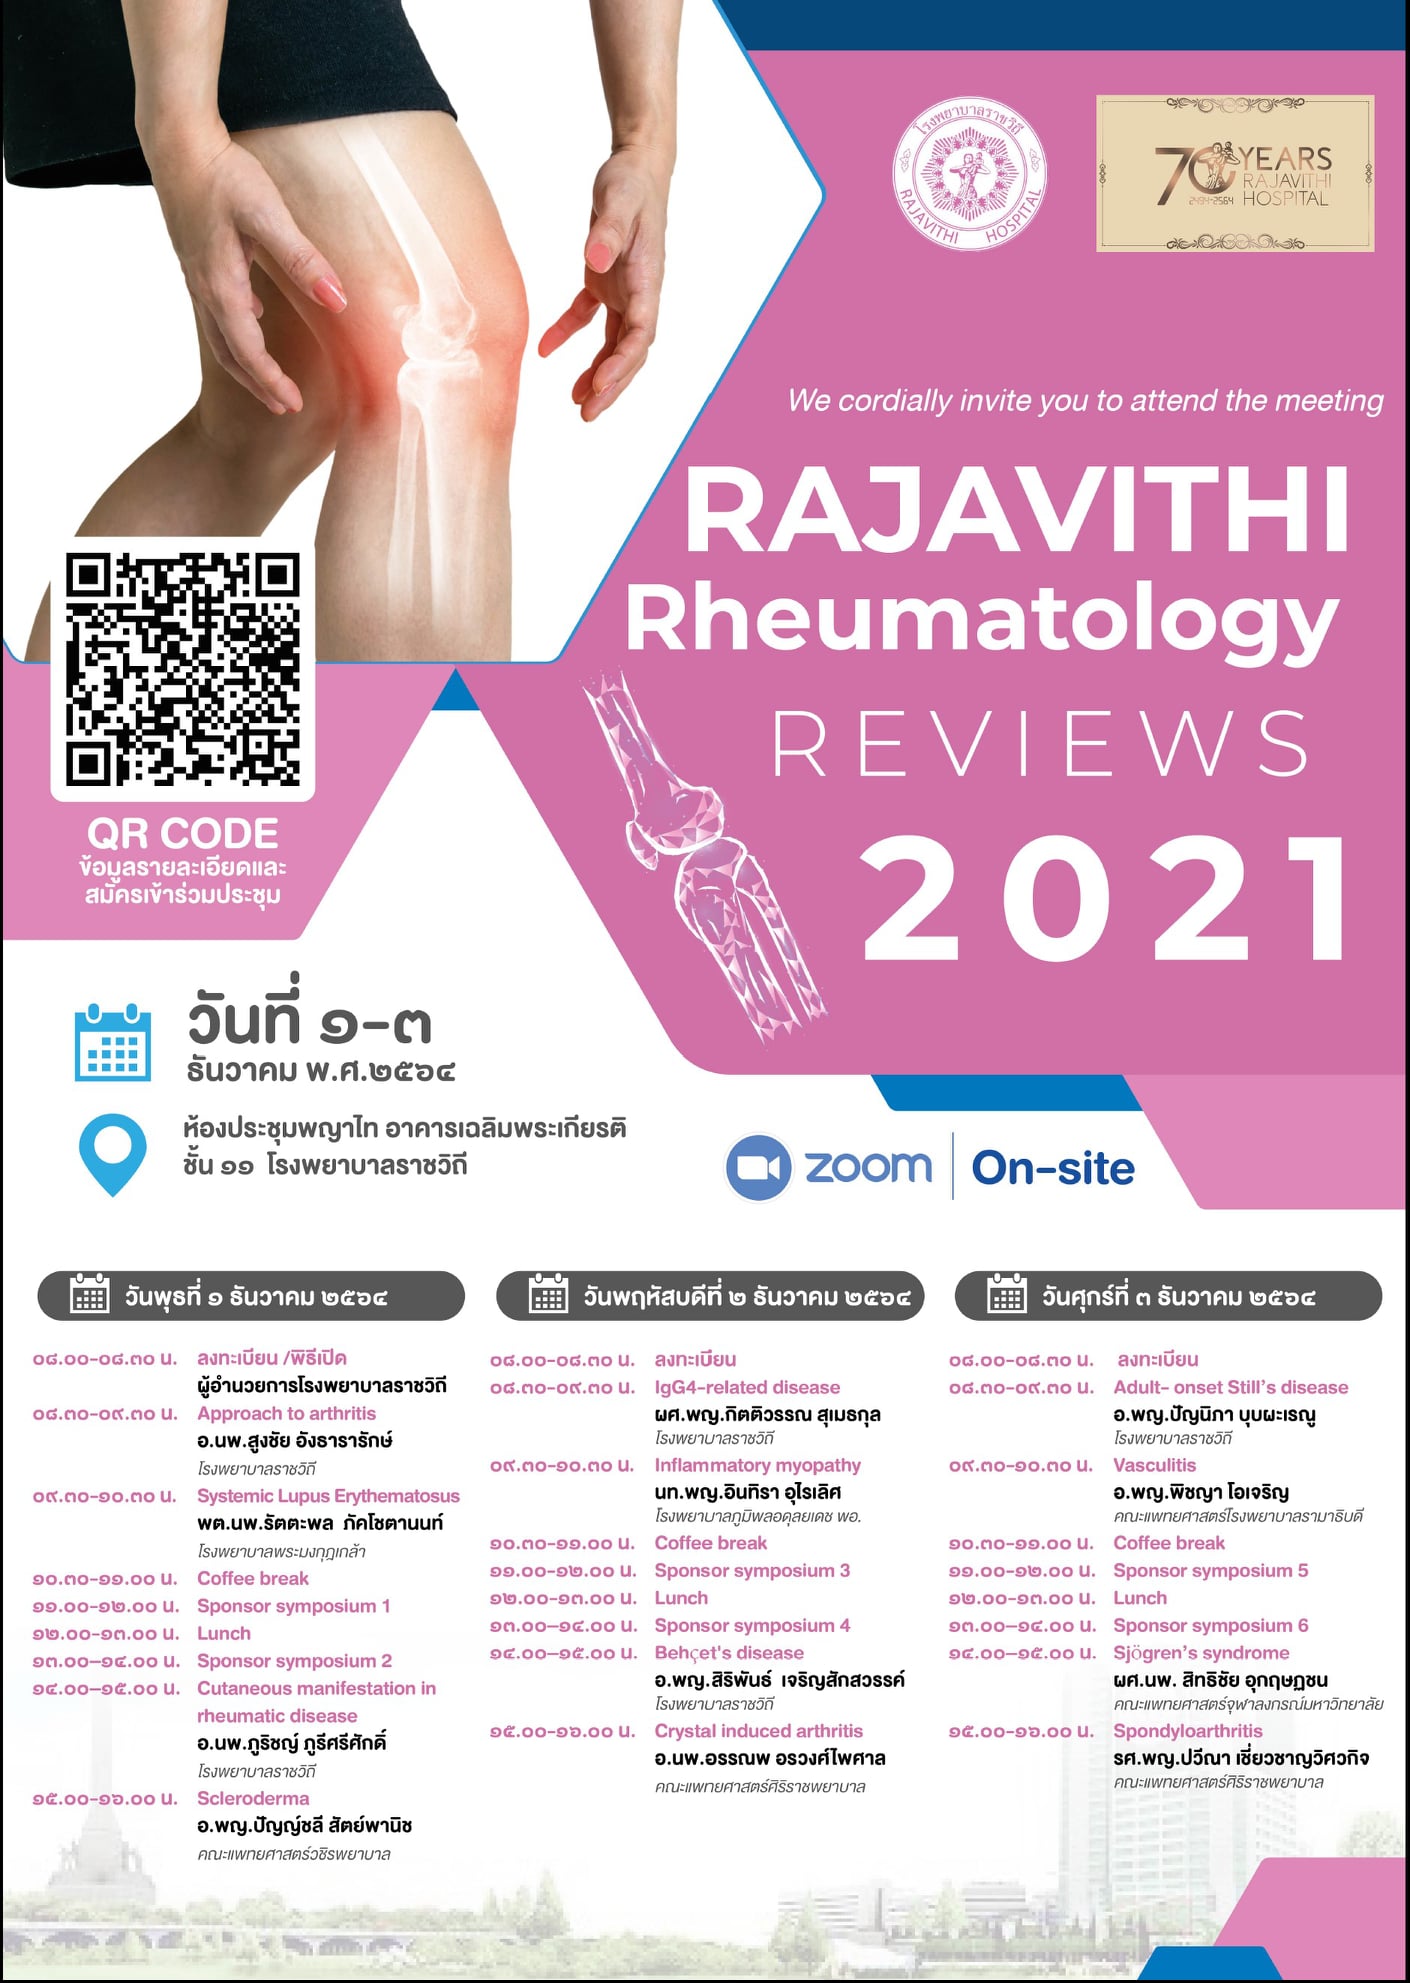 Rajavithi Rheumatology reviews 2021